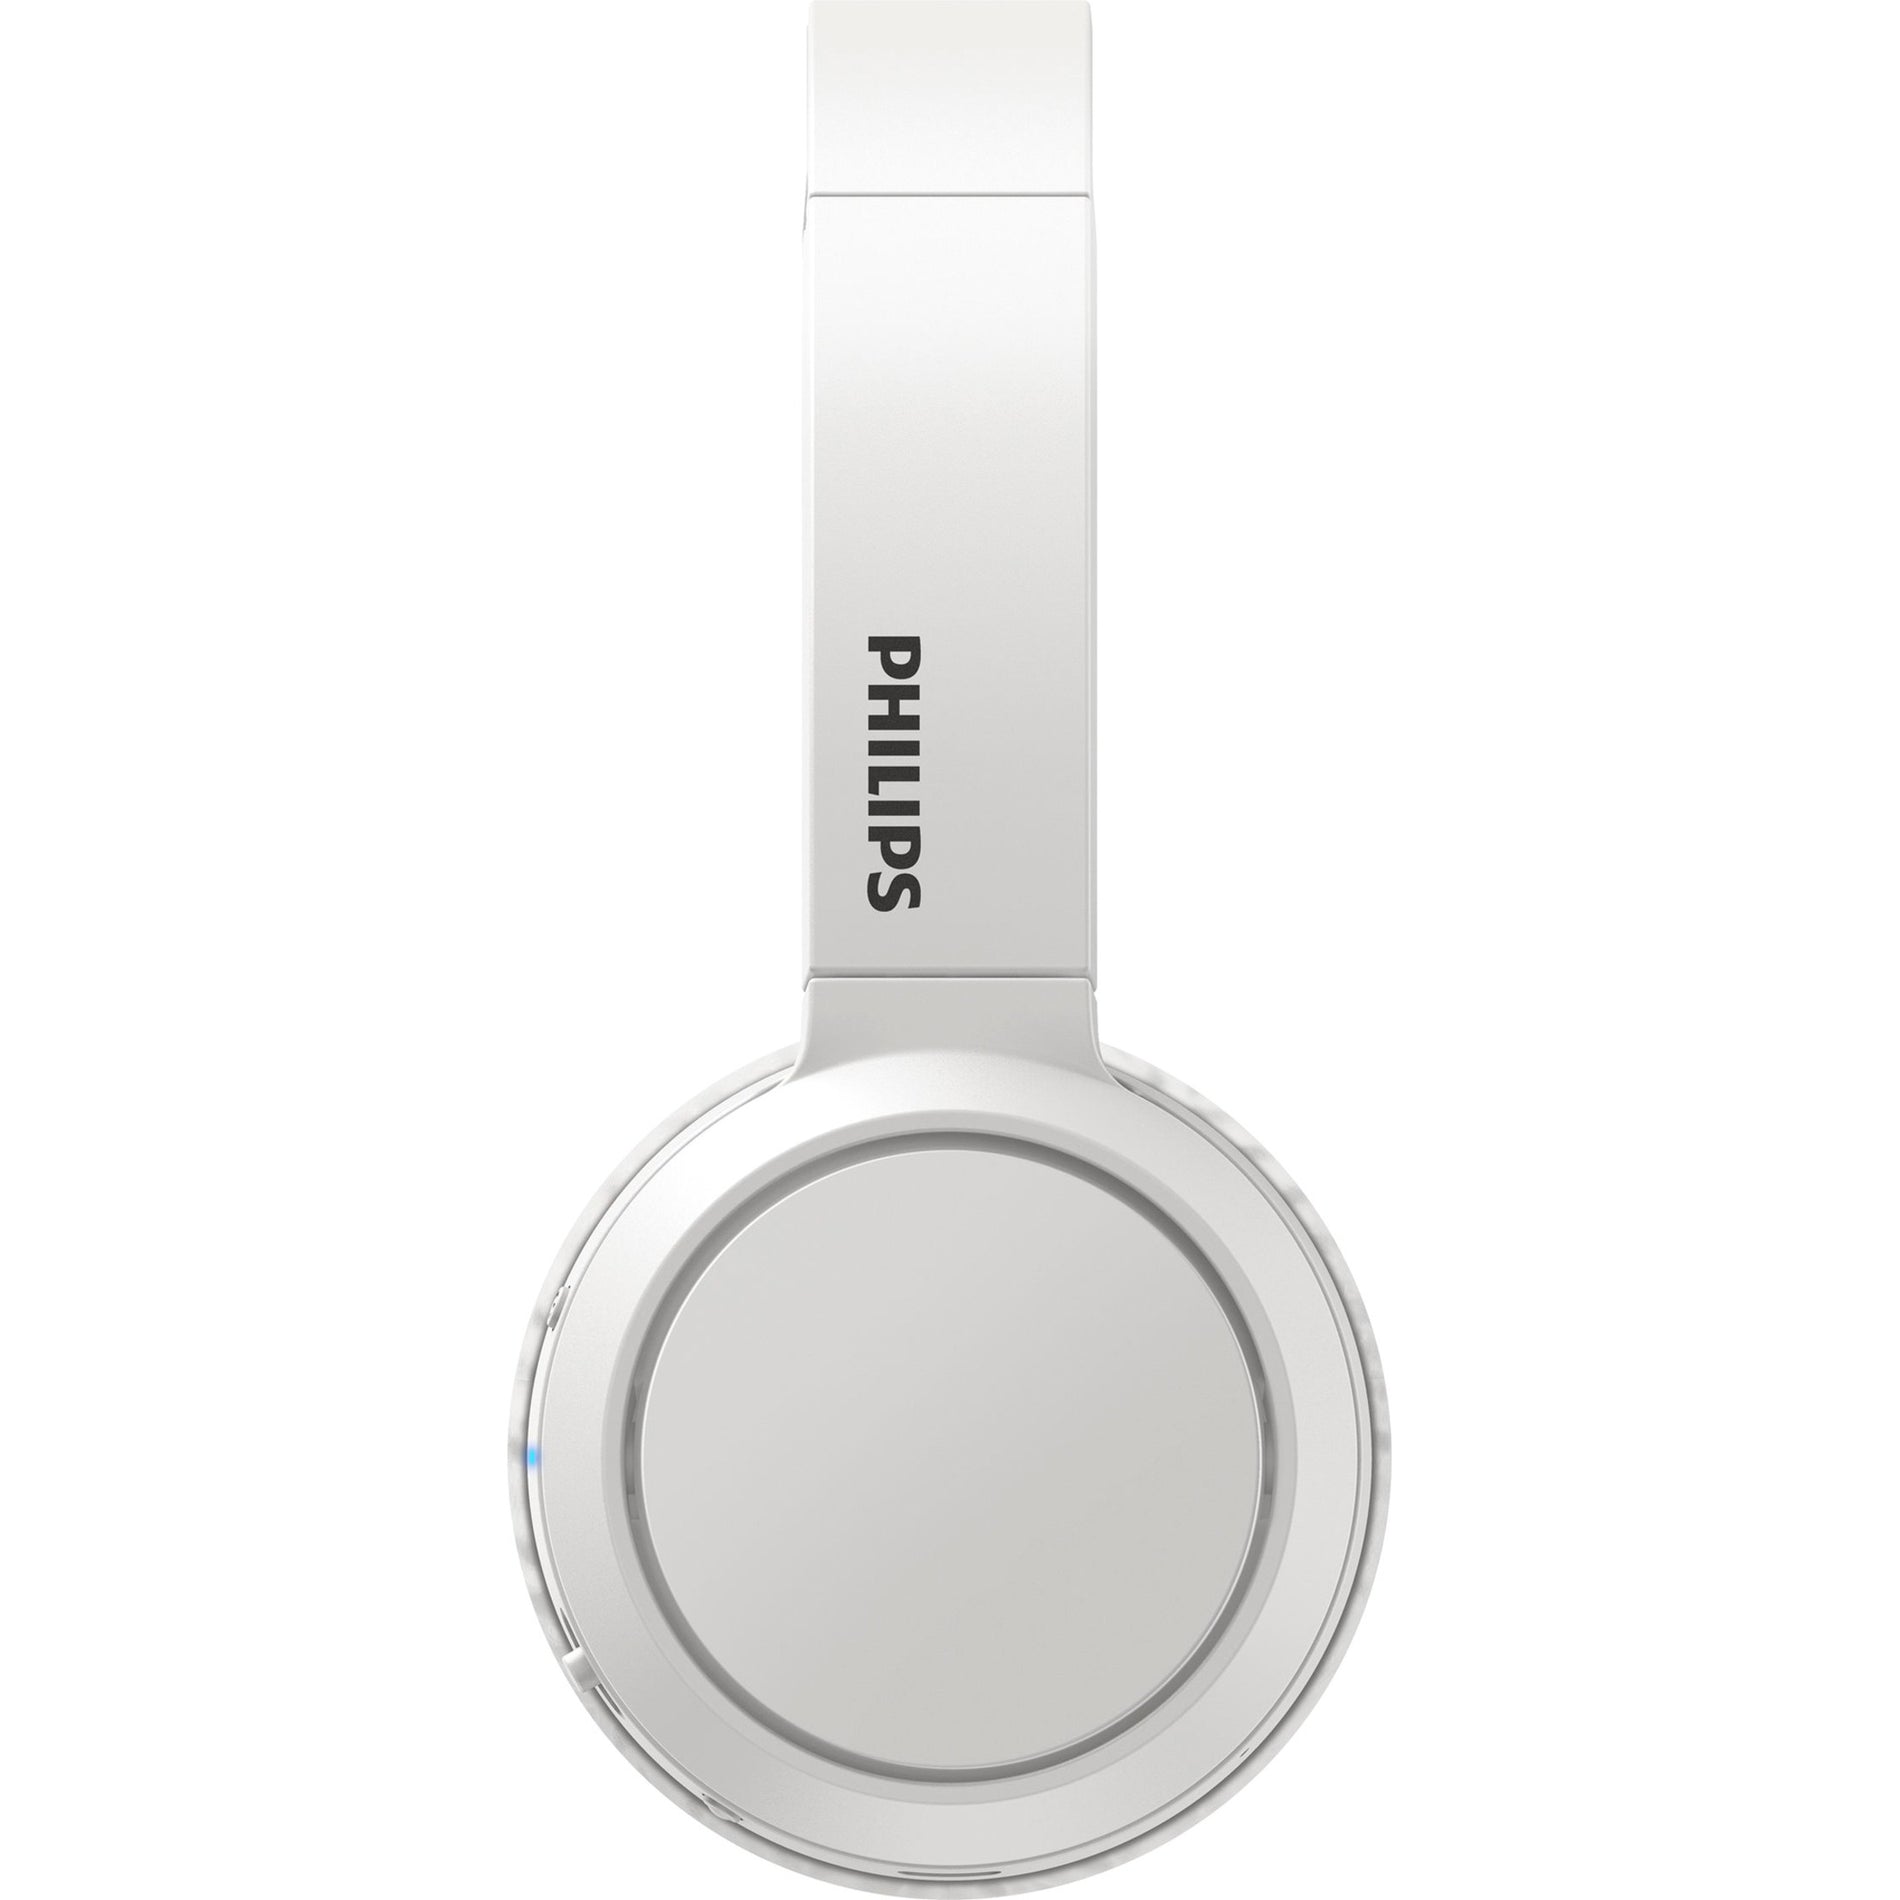 Philips TAH4205WT/00 On-Ear Wireless Headphones, Lightweight, Bass Boost, Foldable, White